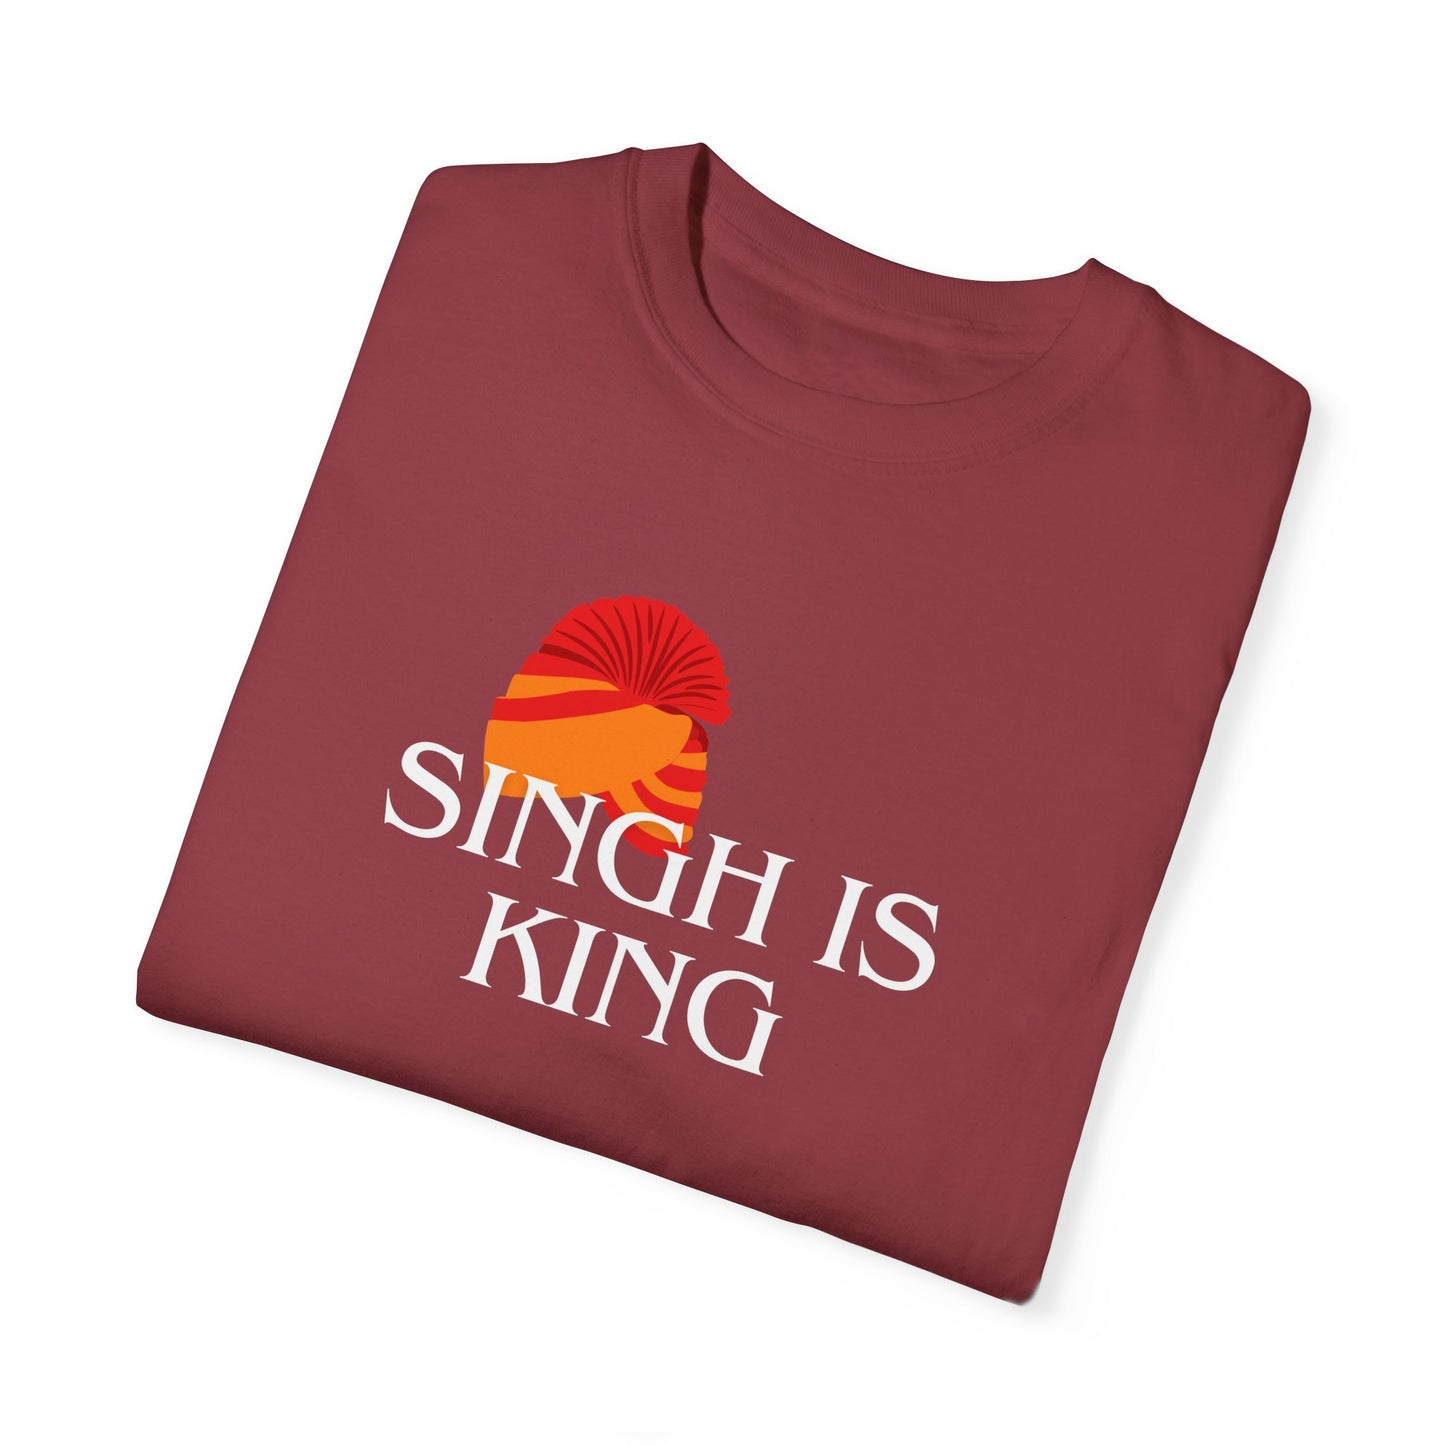 Singh Is King T-shirt